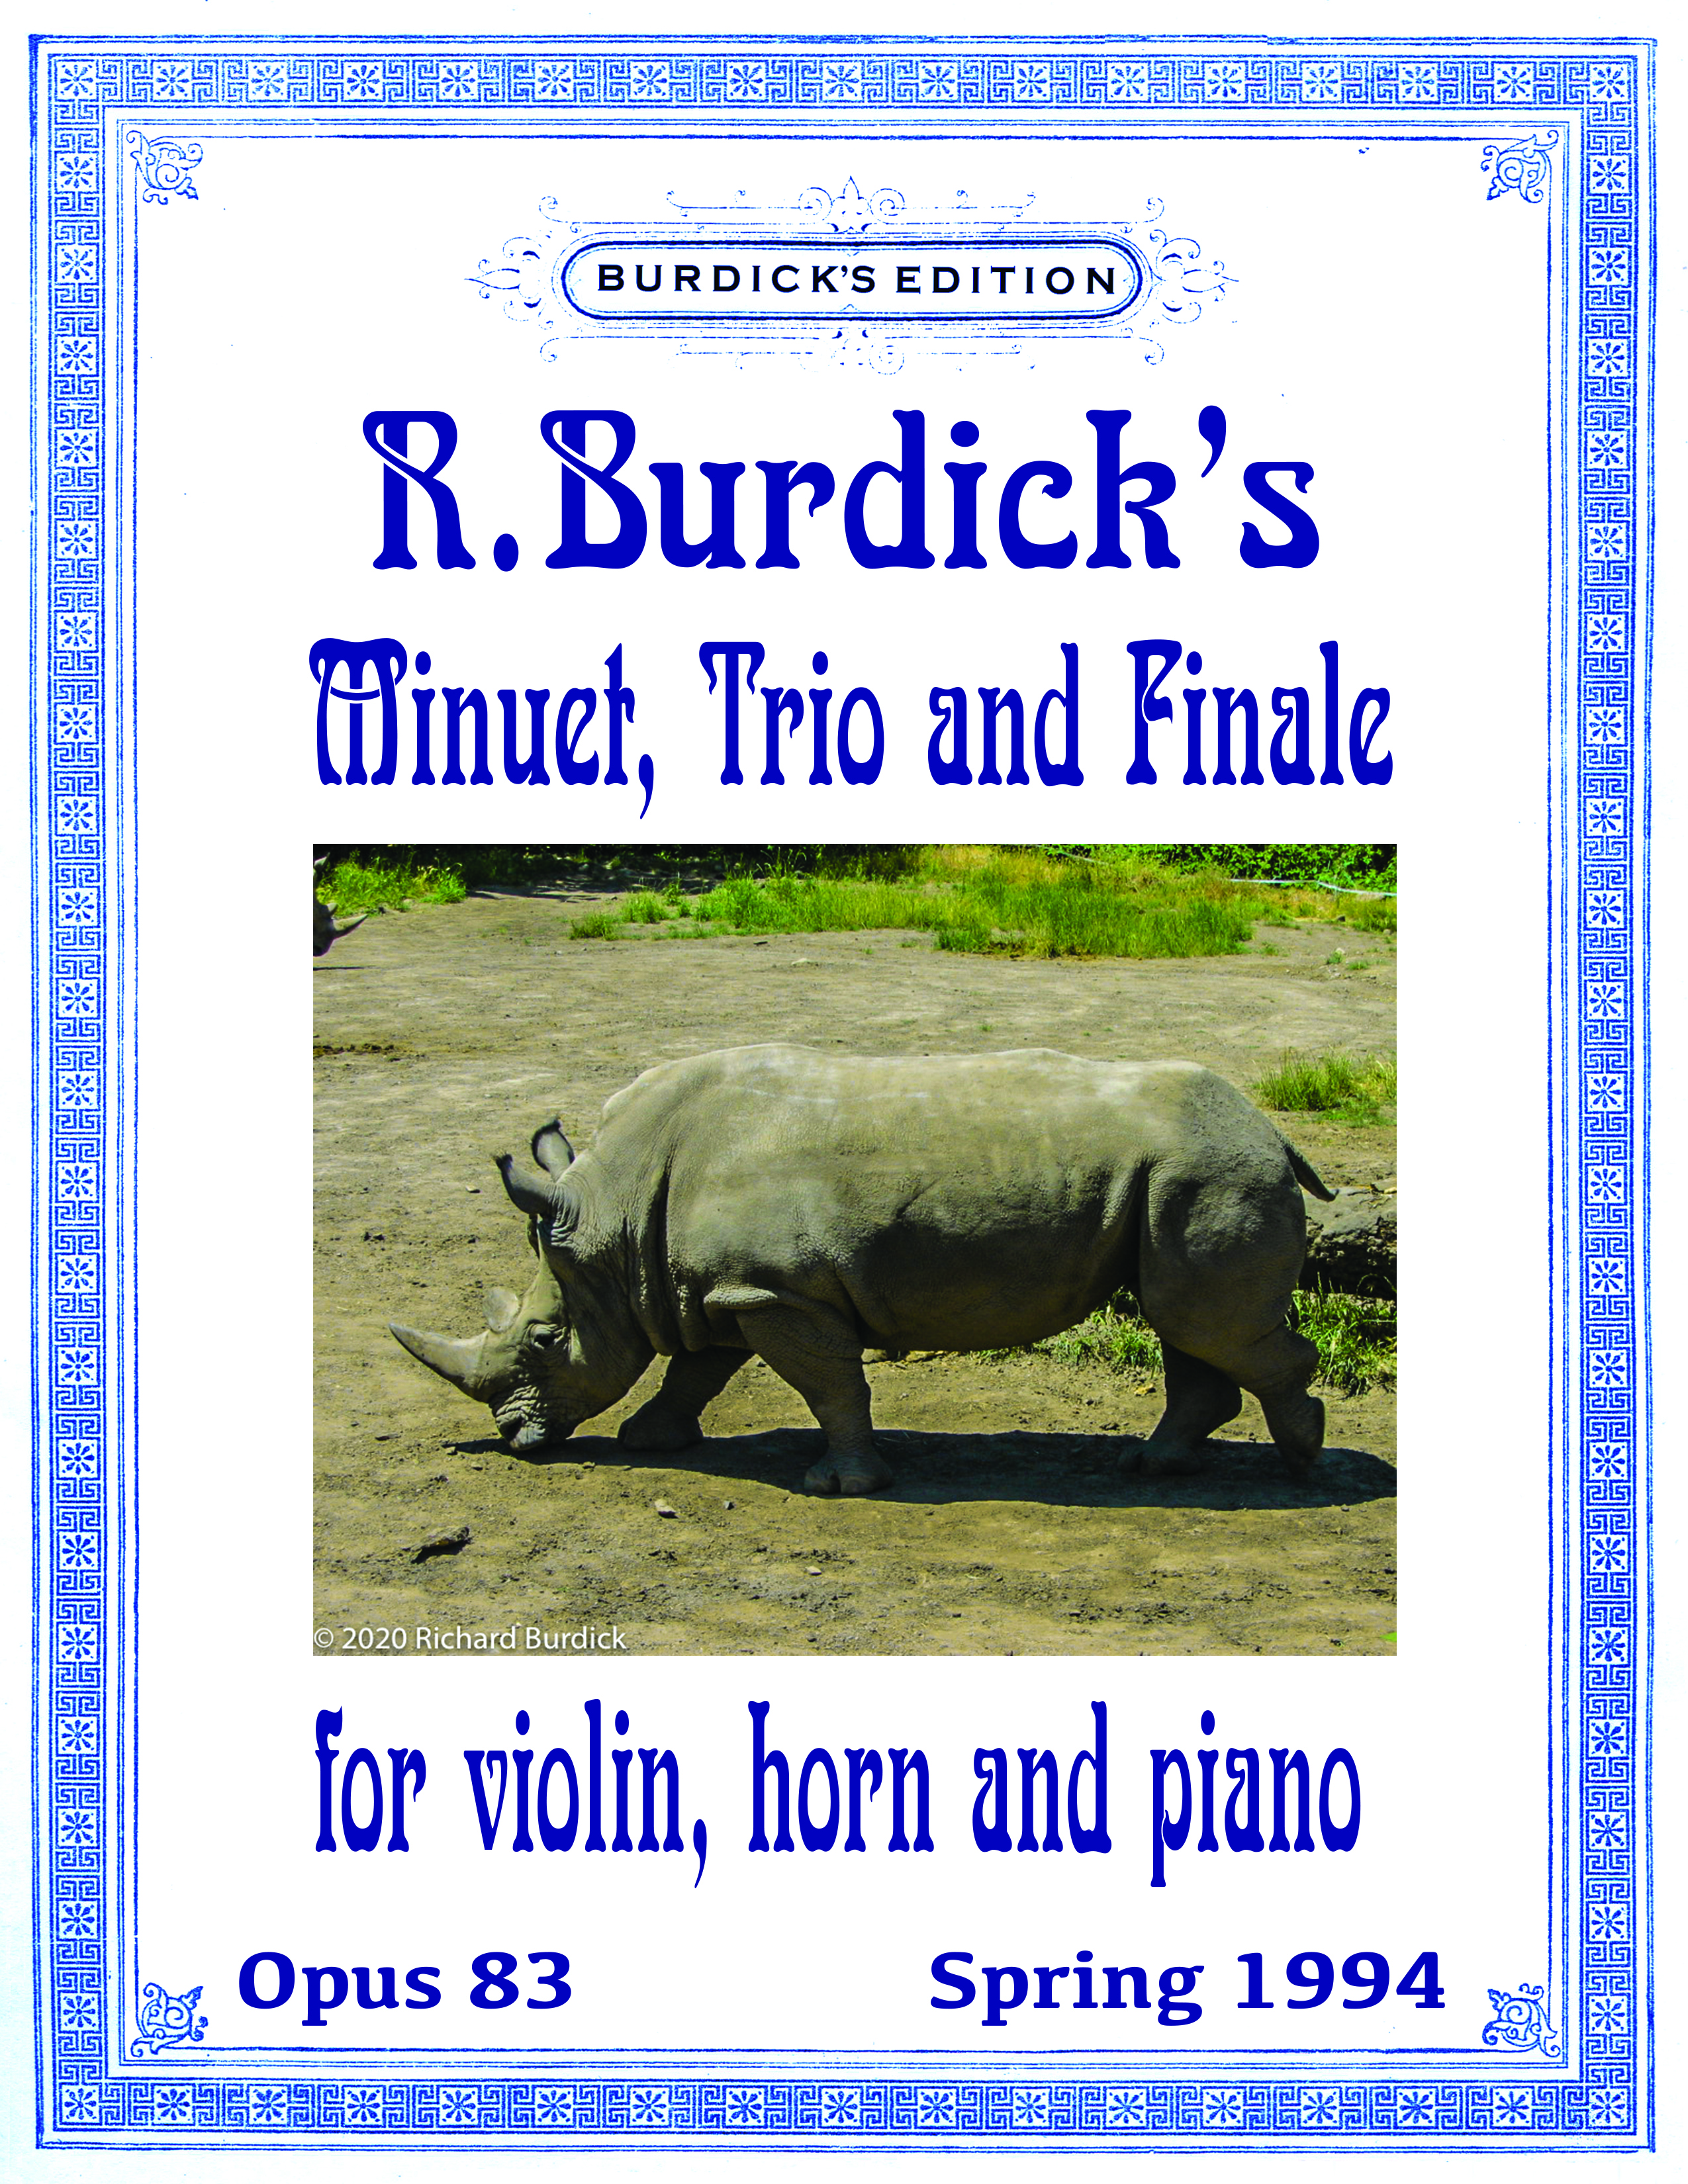 Sheet music cover for Burdick's Op. 32 Romance